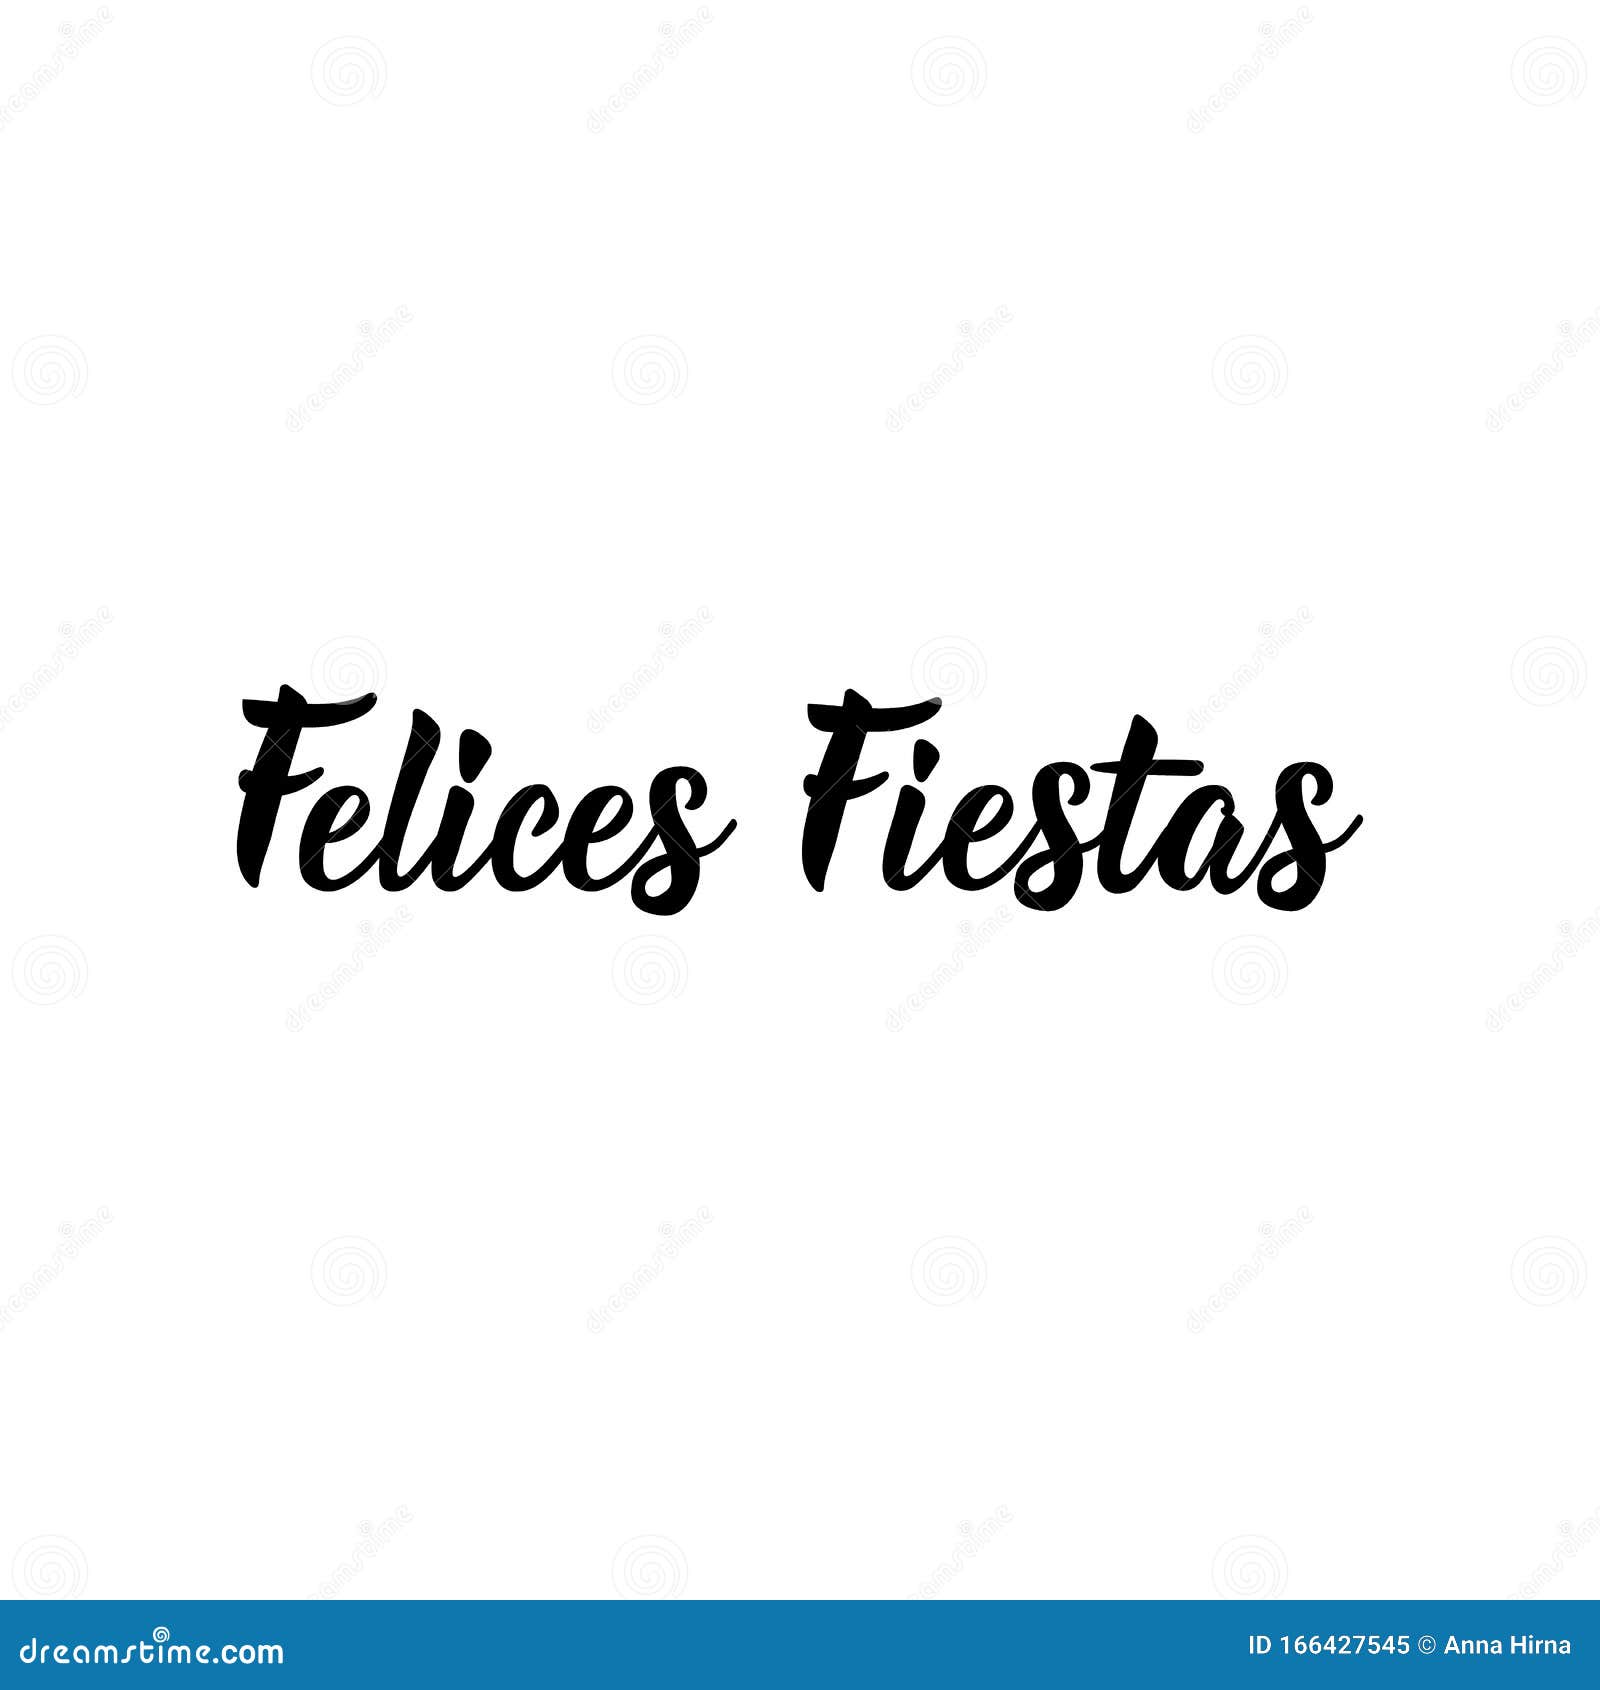 happy holidays - in spanish. felices fiestas. lettering